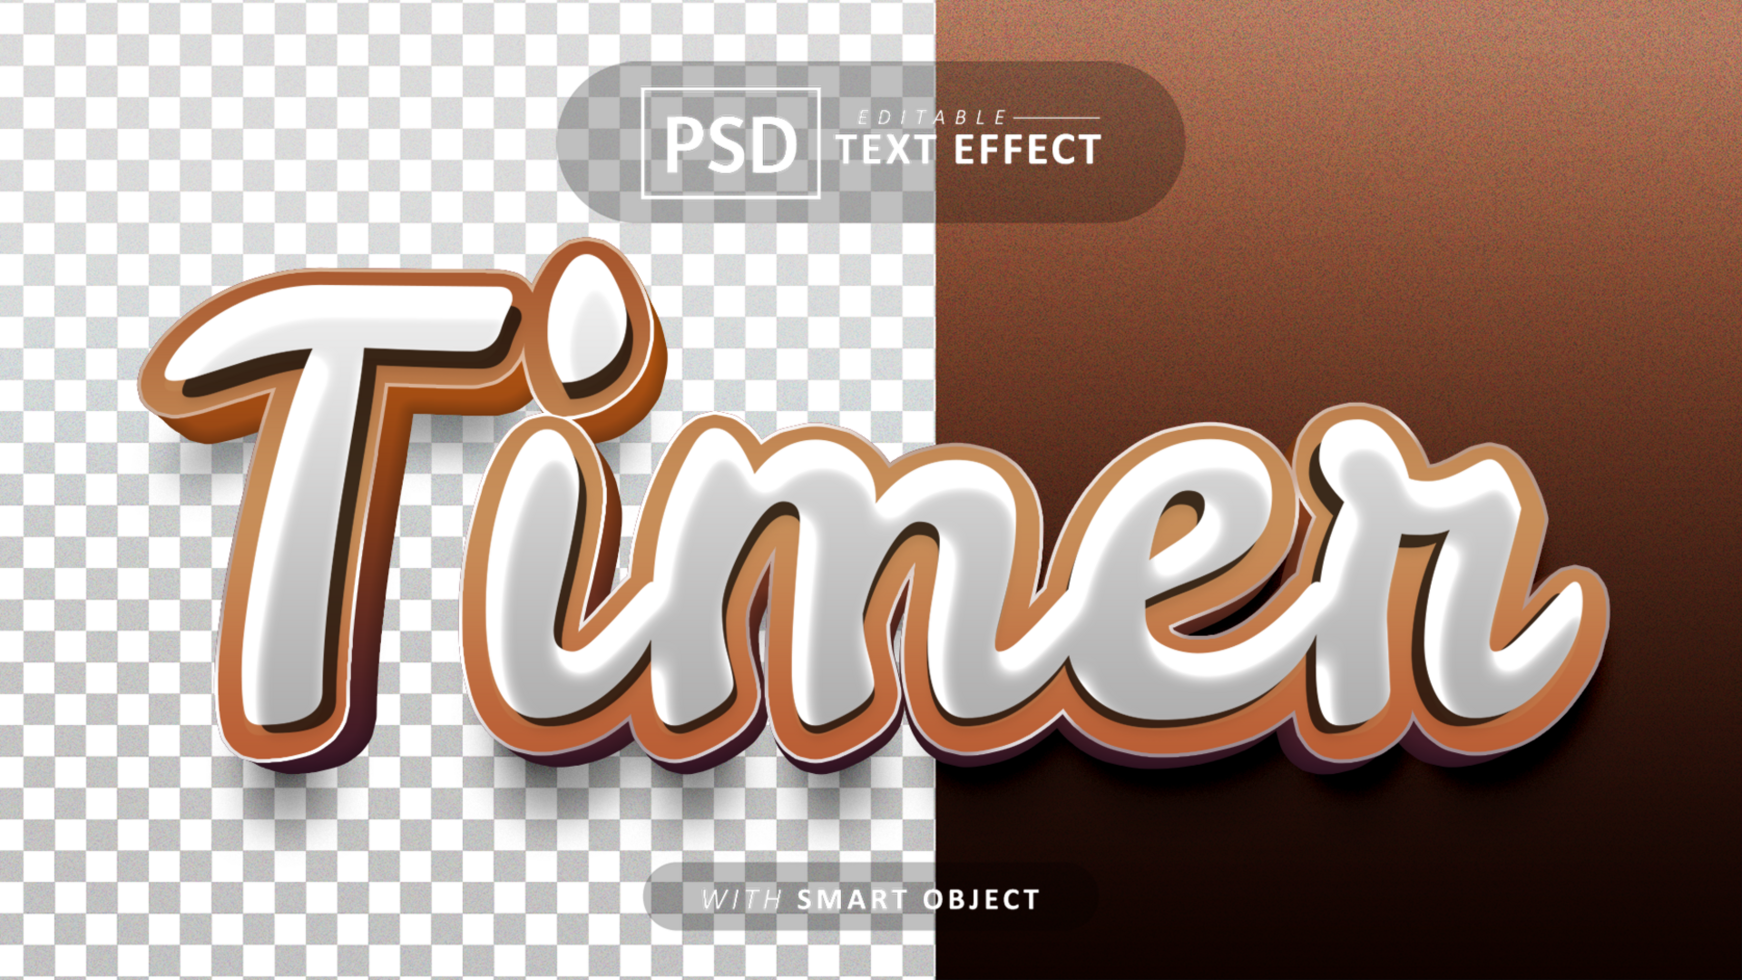 Timer text - editable 3d font effects psd